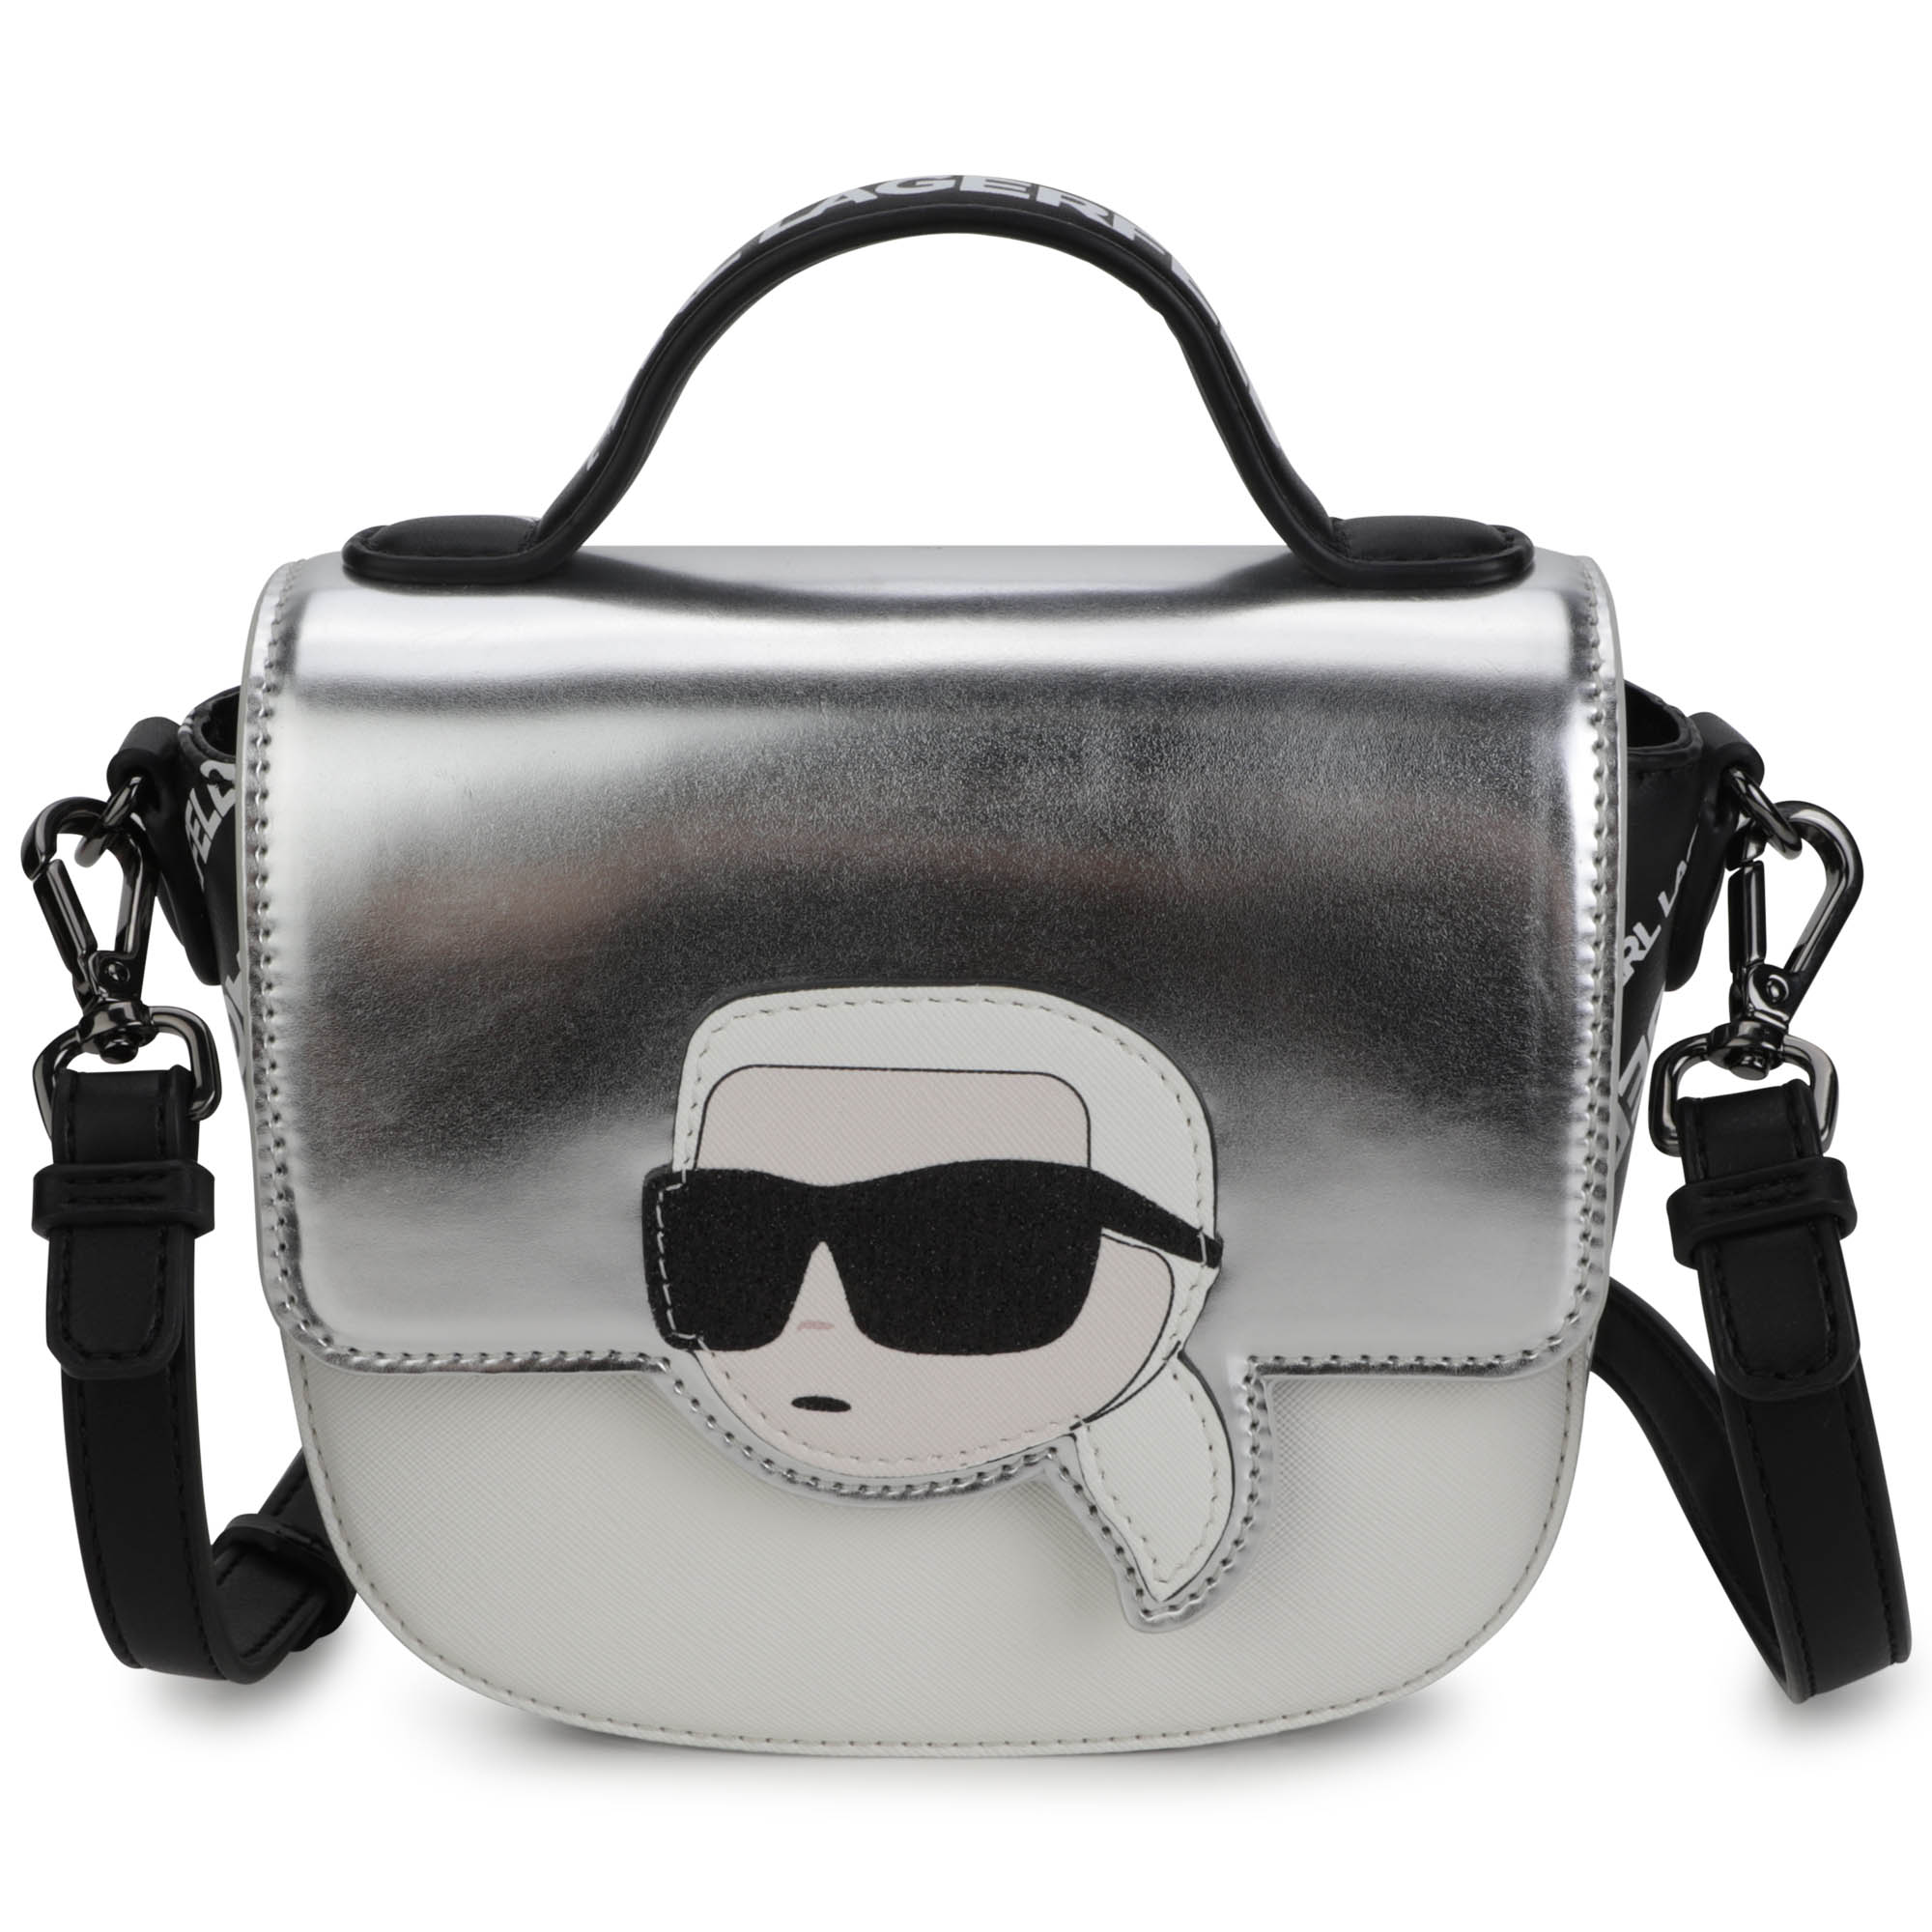 Karl Lagerfeld | Bags | Karl Lagerfeld Paris Womens Bag | Poshmark